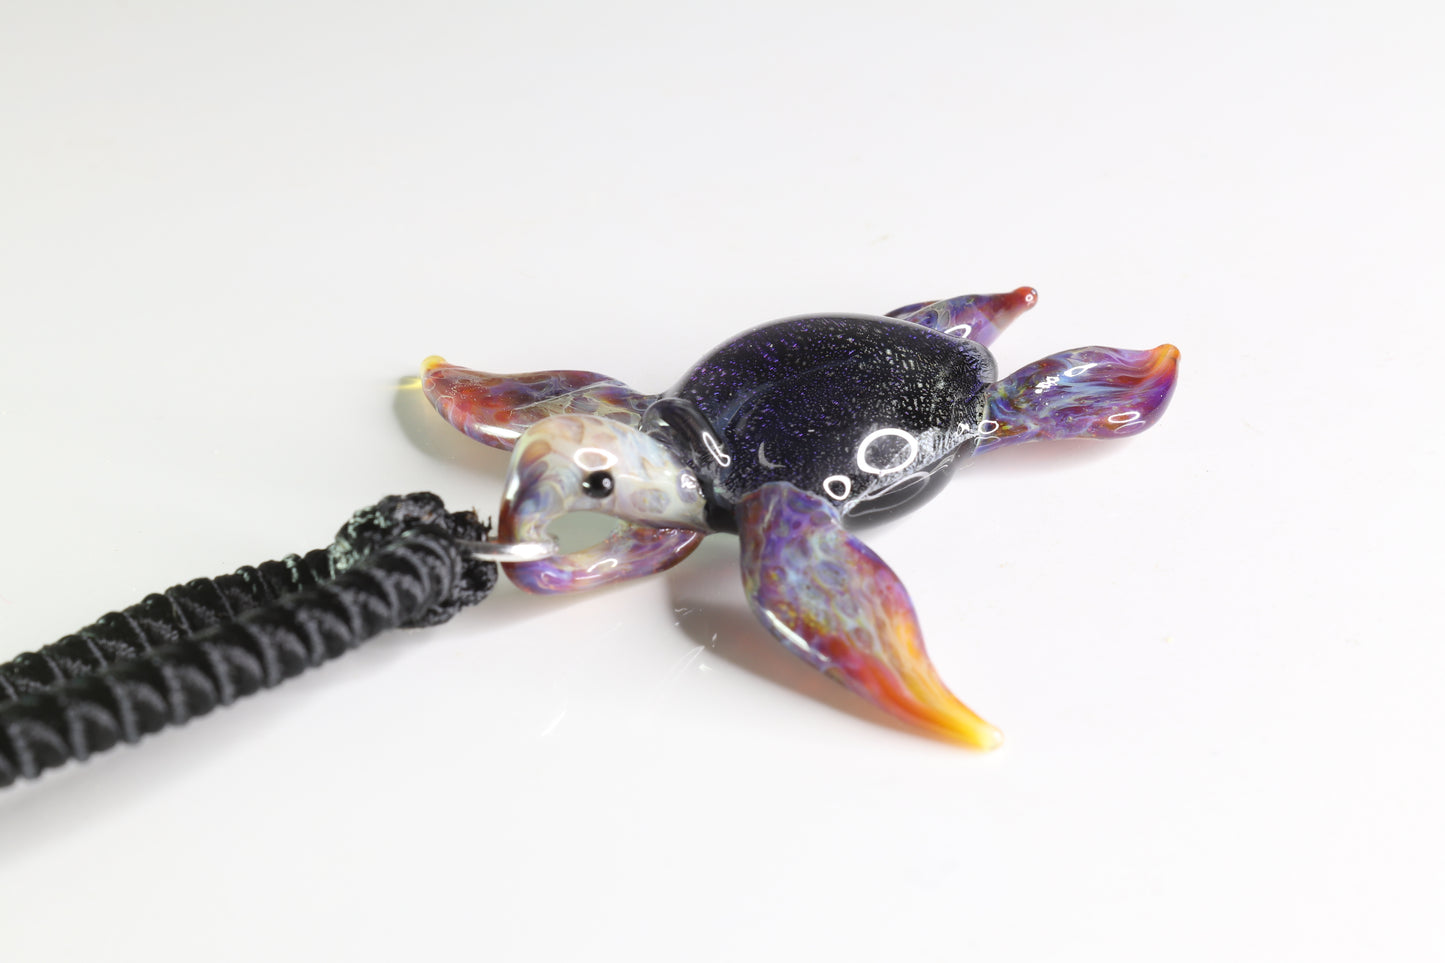 Luminous Hawaiian Purple Glass Sea Turtle Pendant Necklace - GLASSnFIRE